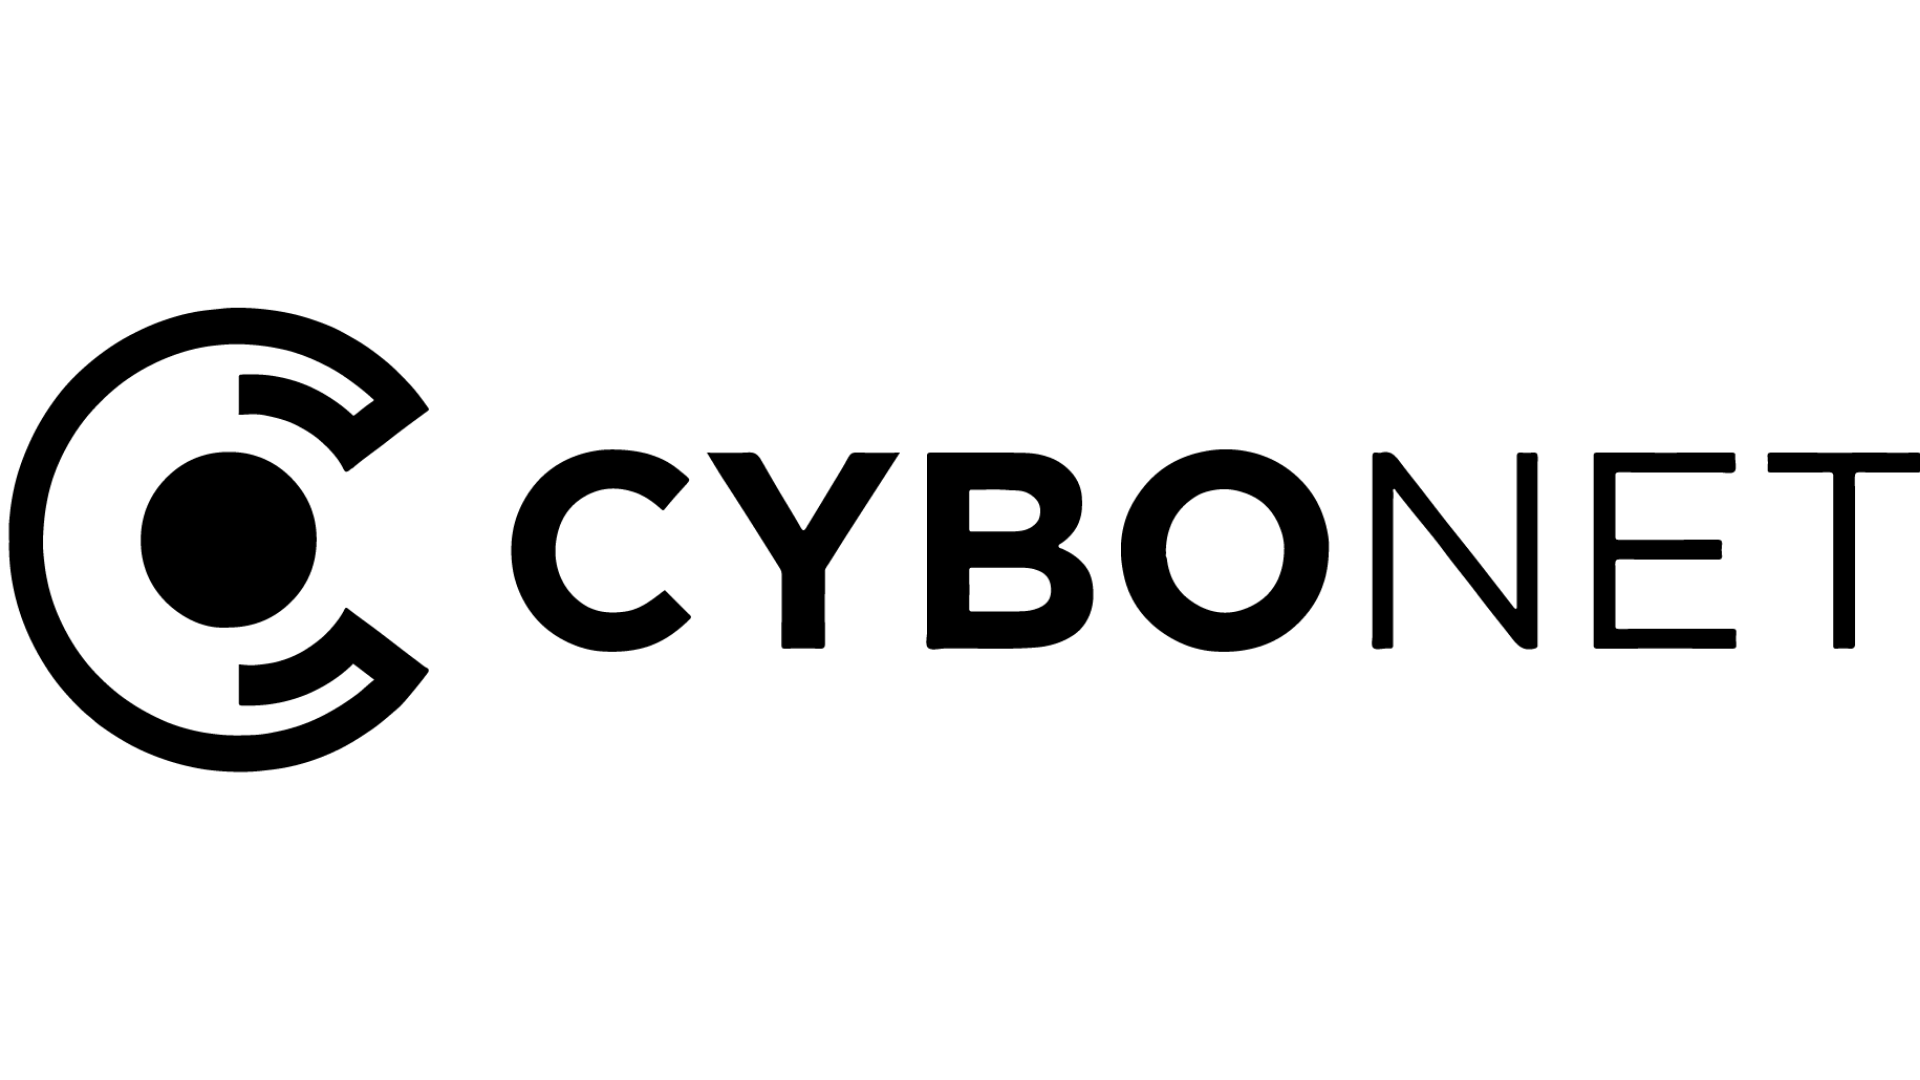 CYBONET logo